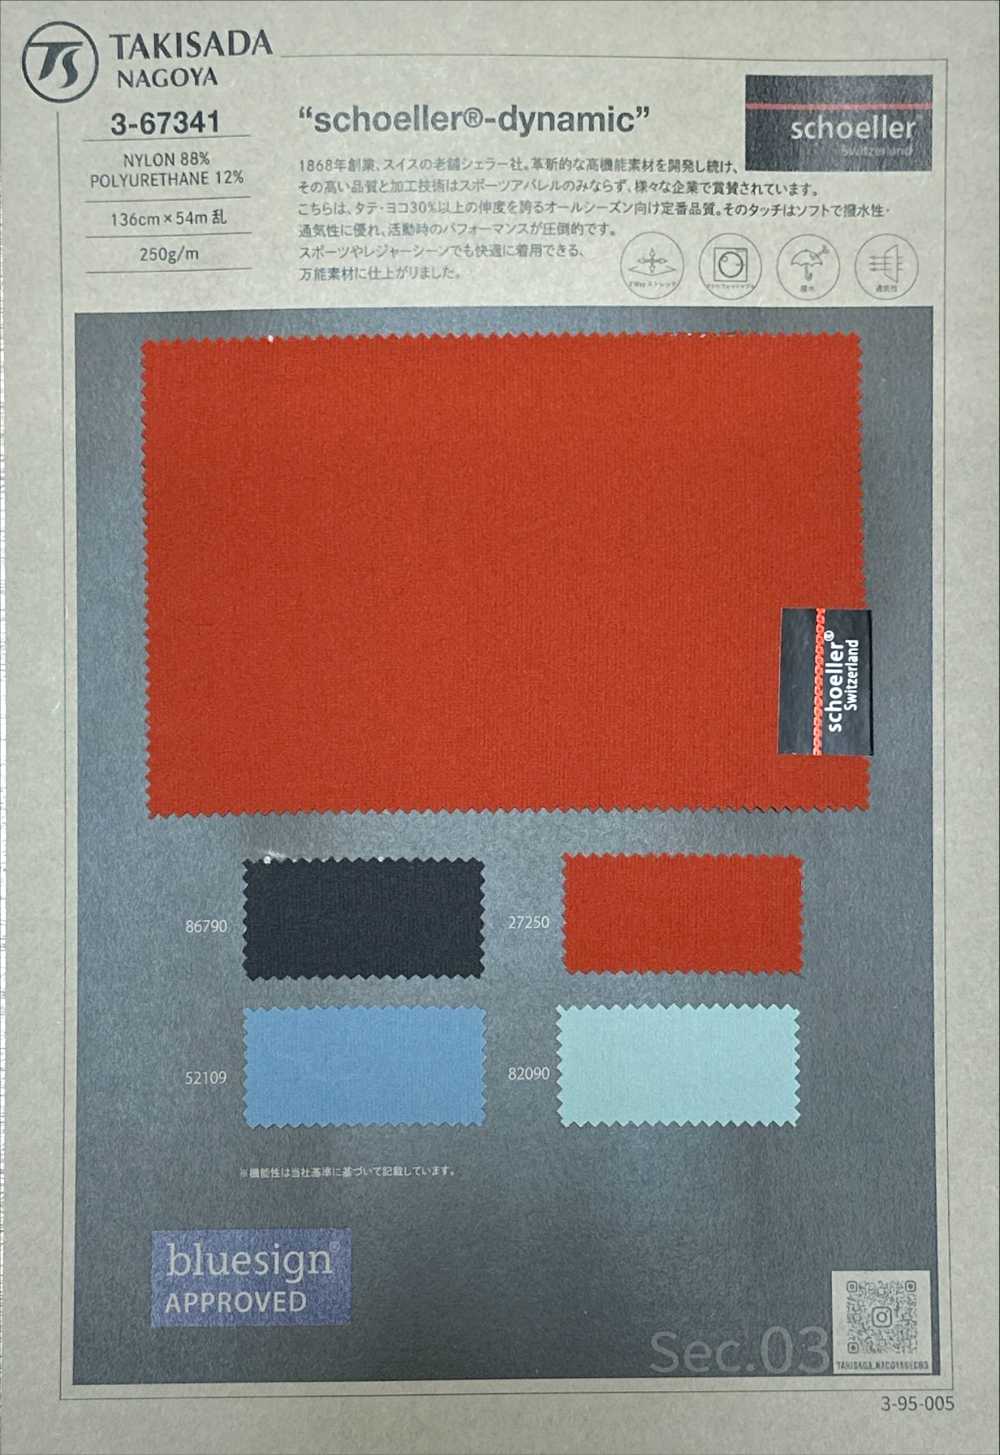 3-67341 Schoeller-dynamic[Textile / Fabric] Takisada Nagoya